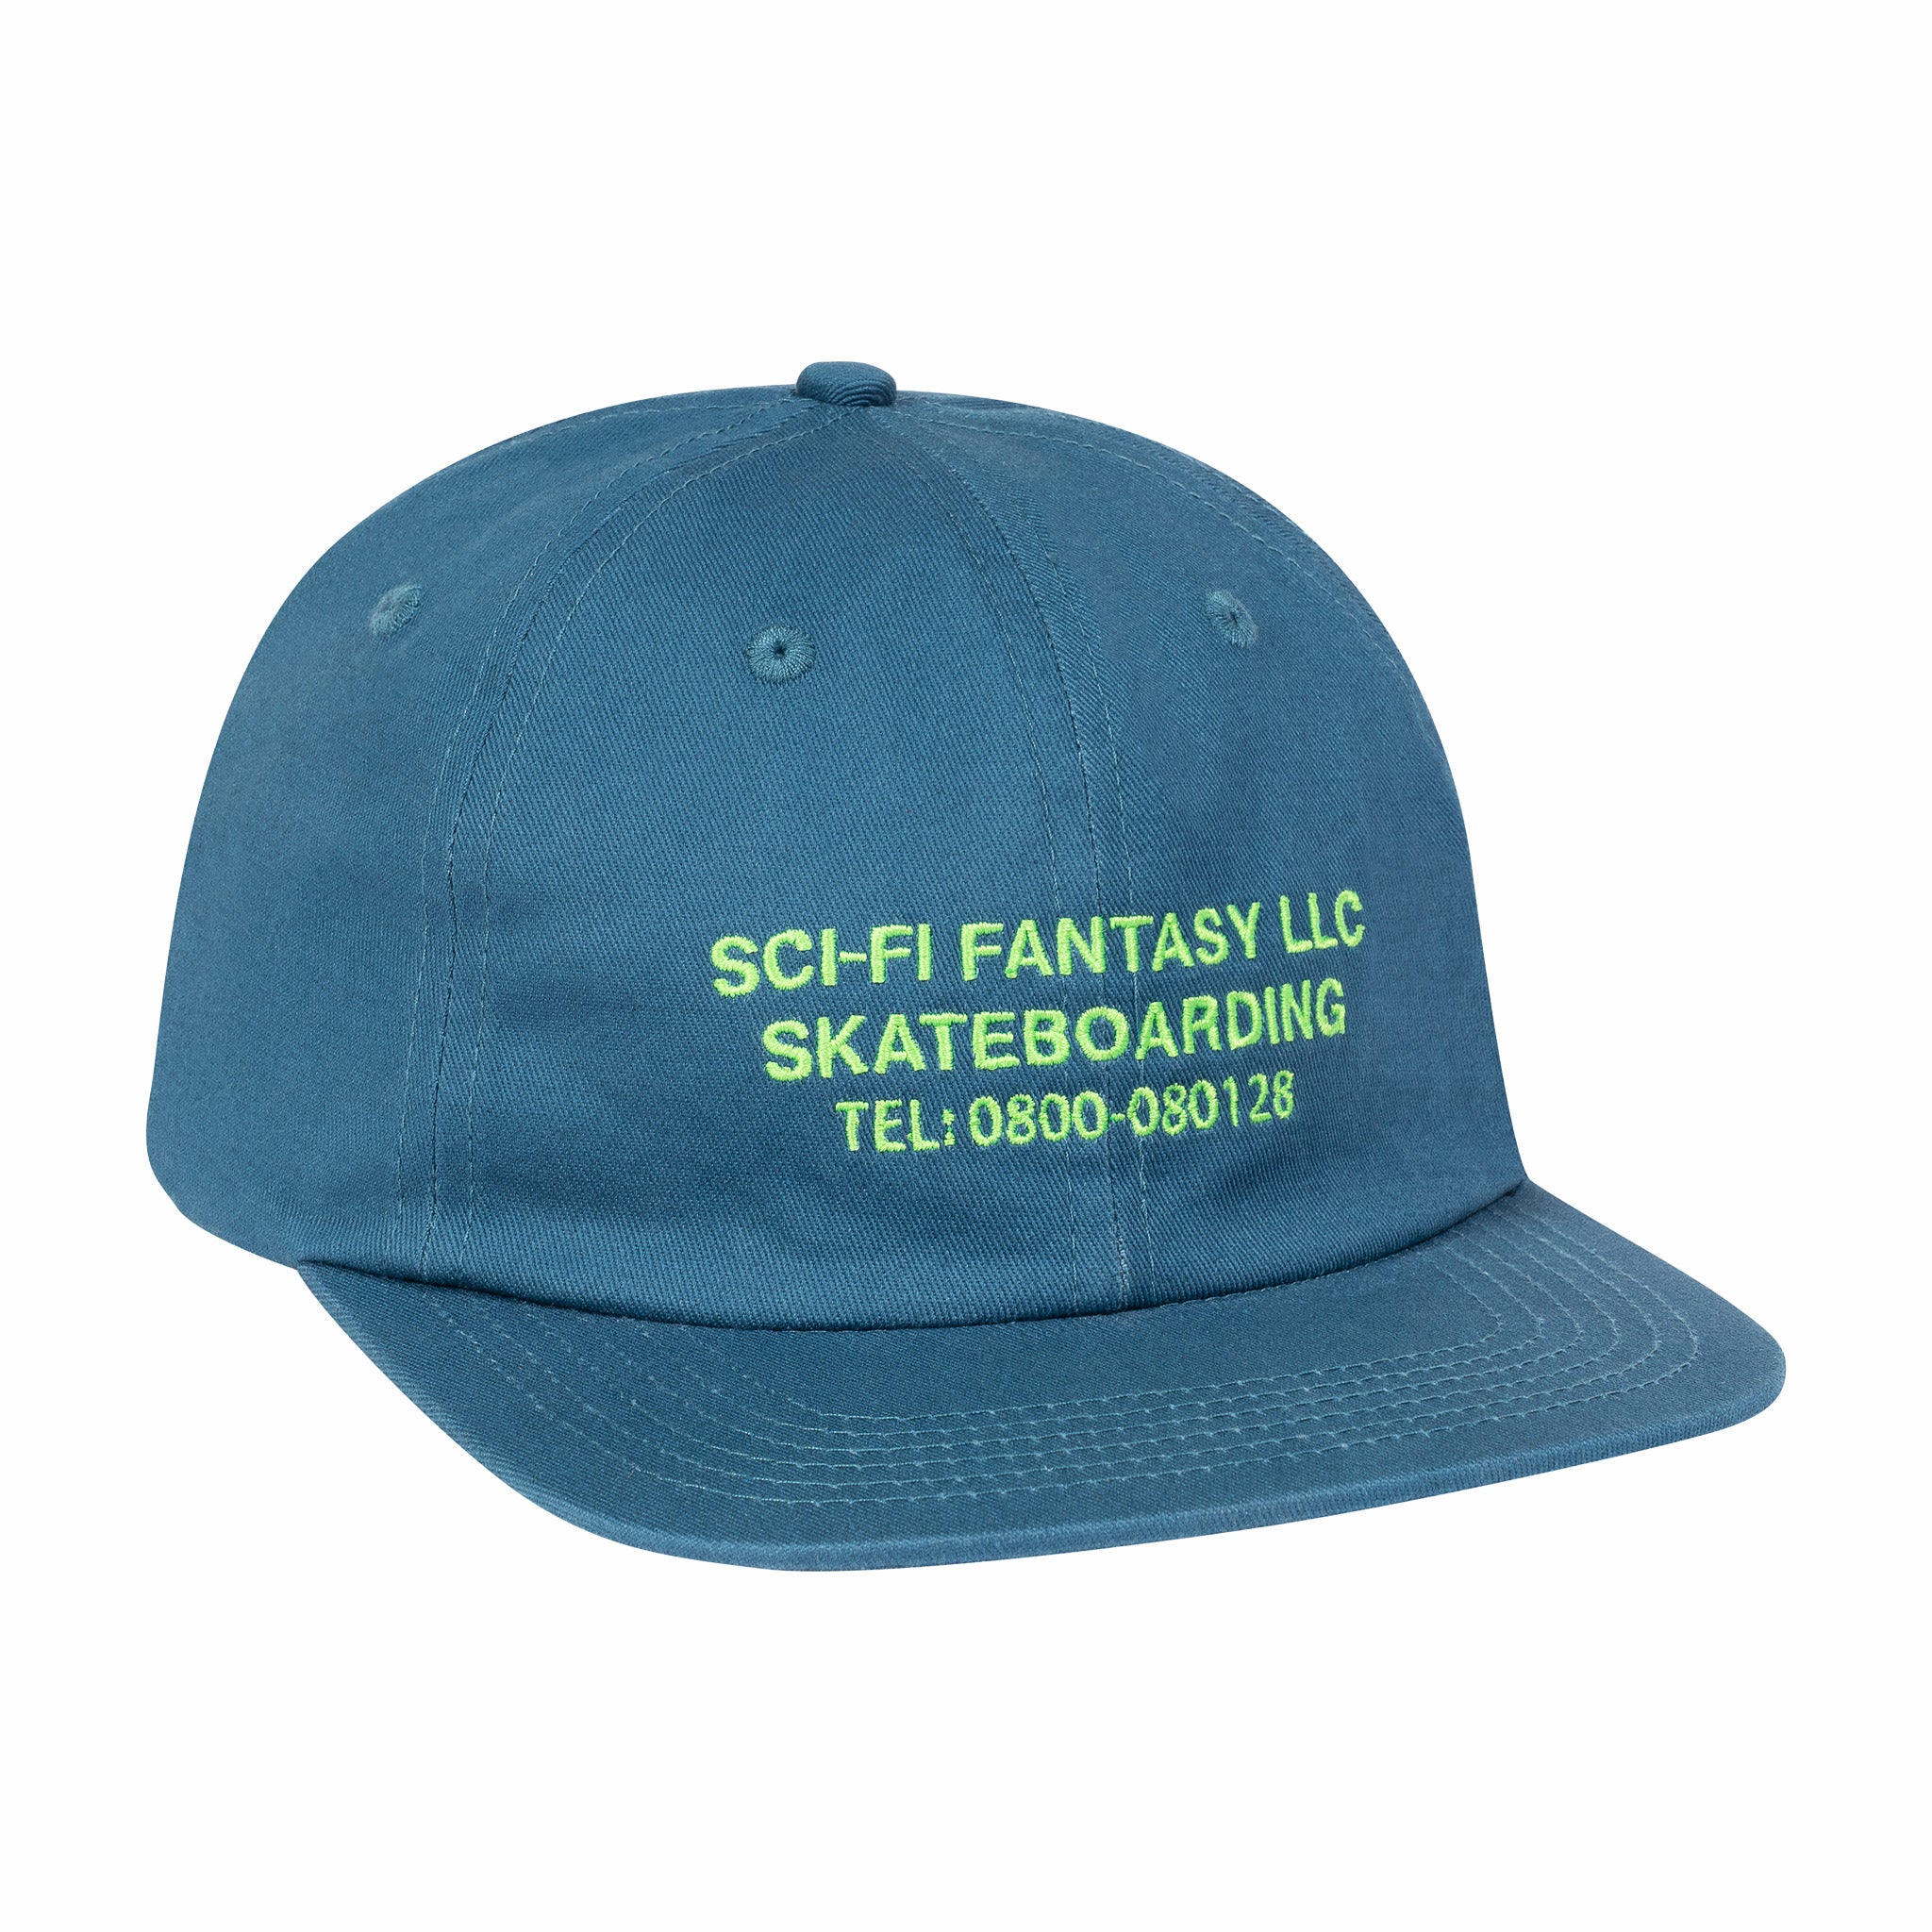 Fantasia fantascientifica, Cappello Sci-FI Fantasy LLC (Blu)